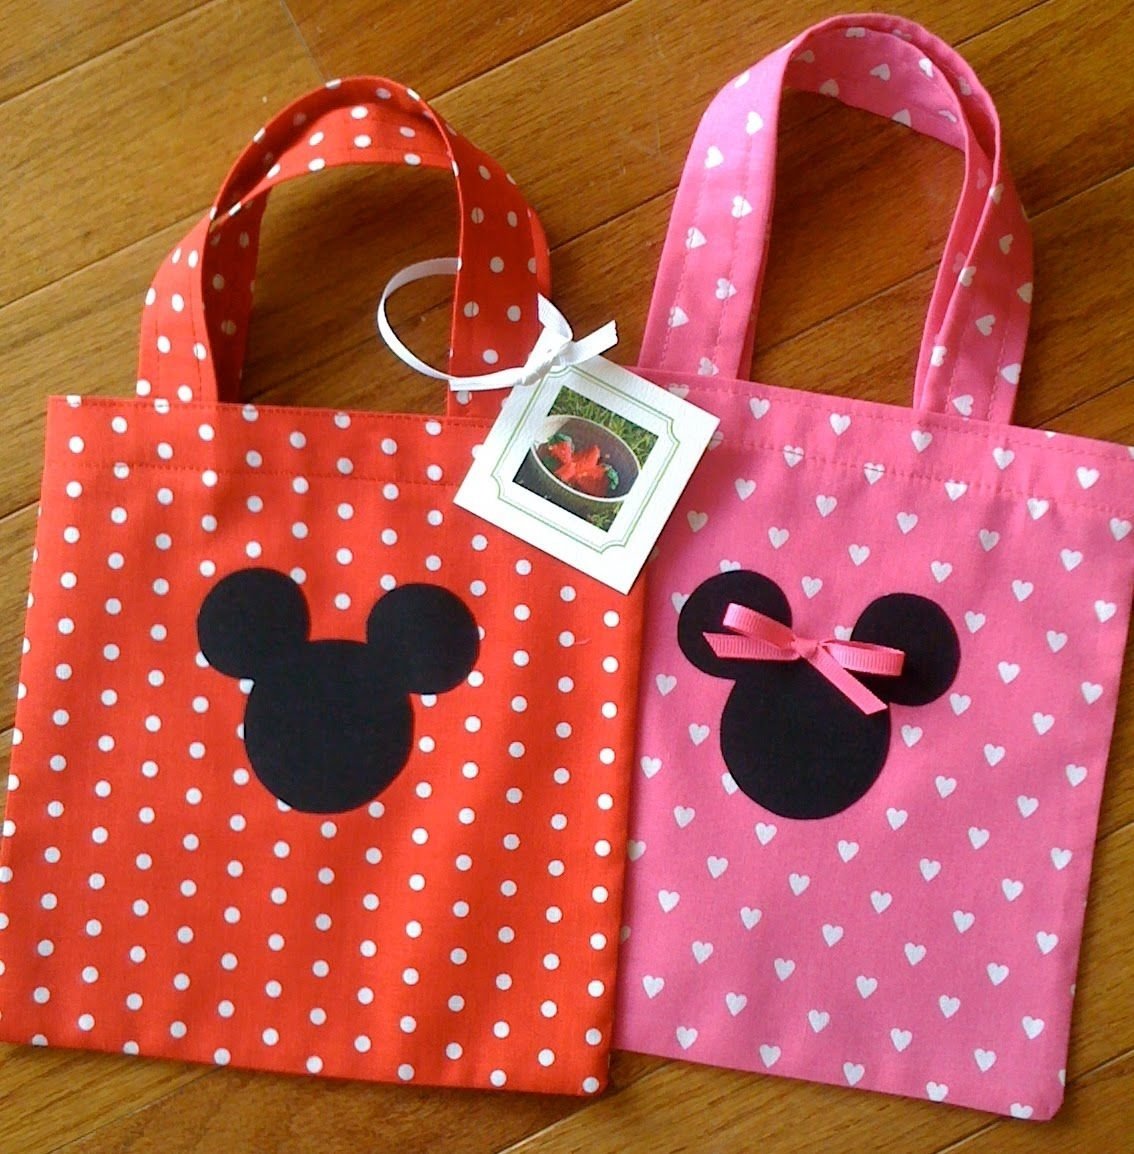 10 Gorgeous Minnie Mouse Goody Bags Ideas minnie mouse party making 20 mickey and minnie mouse goody bags 1 2022